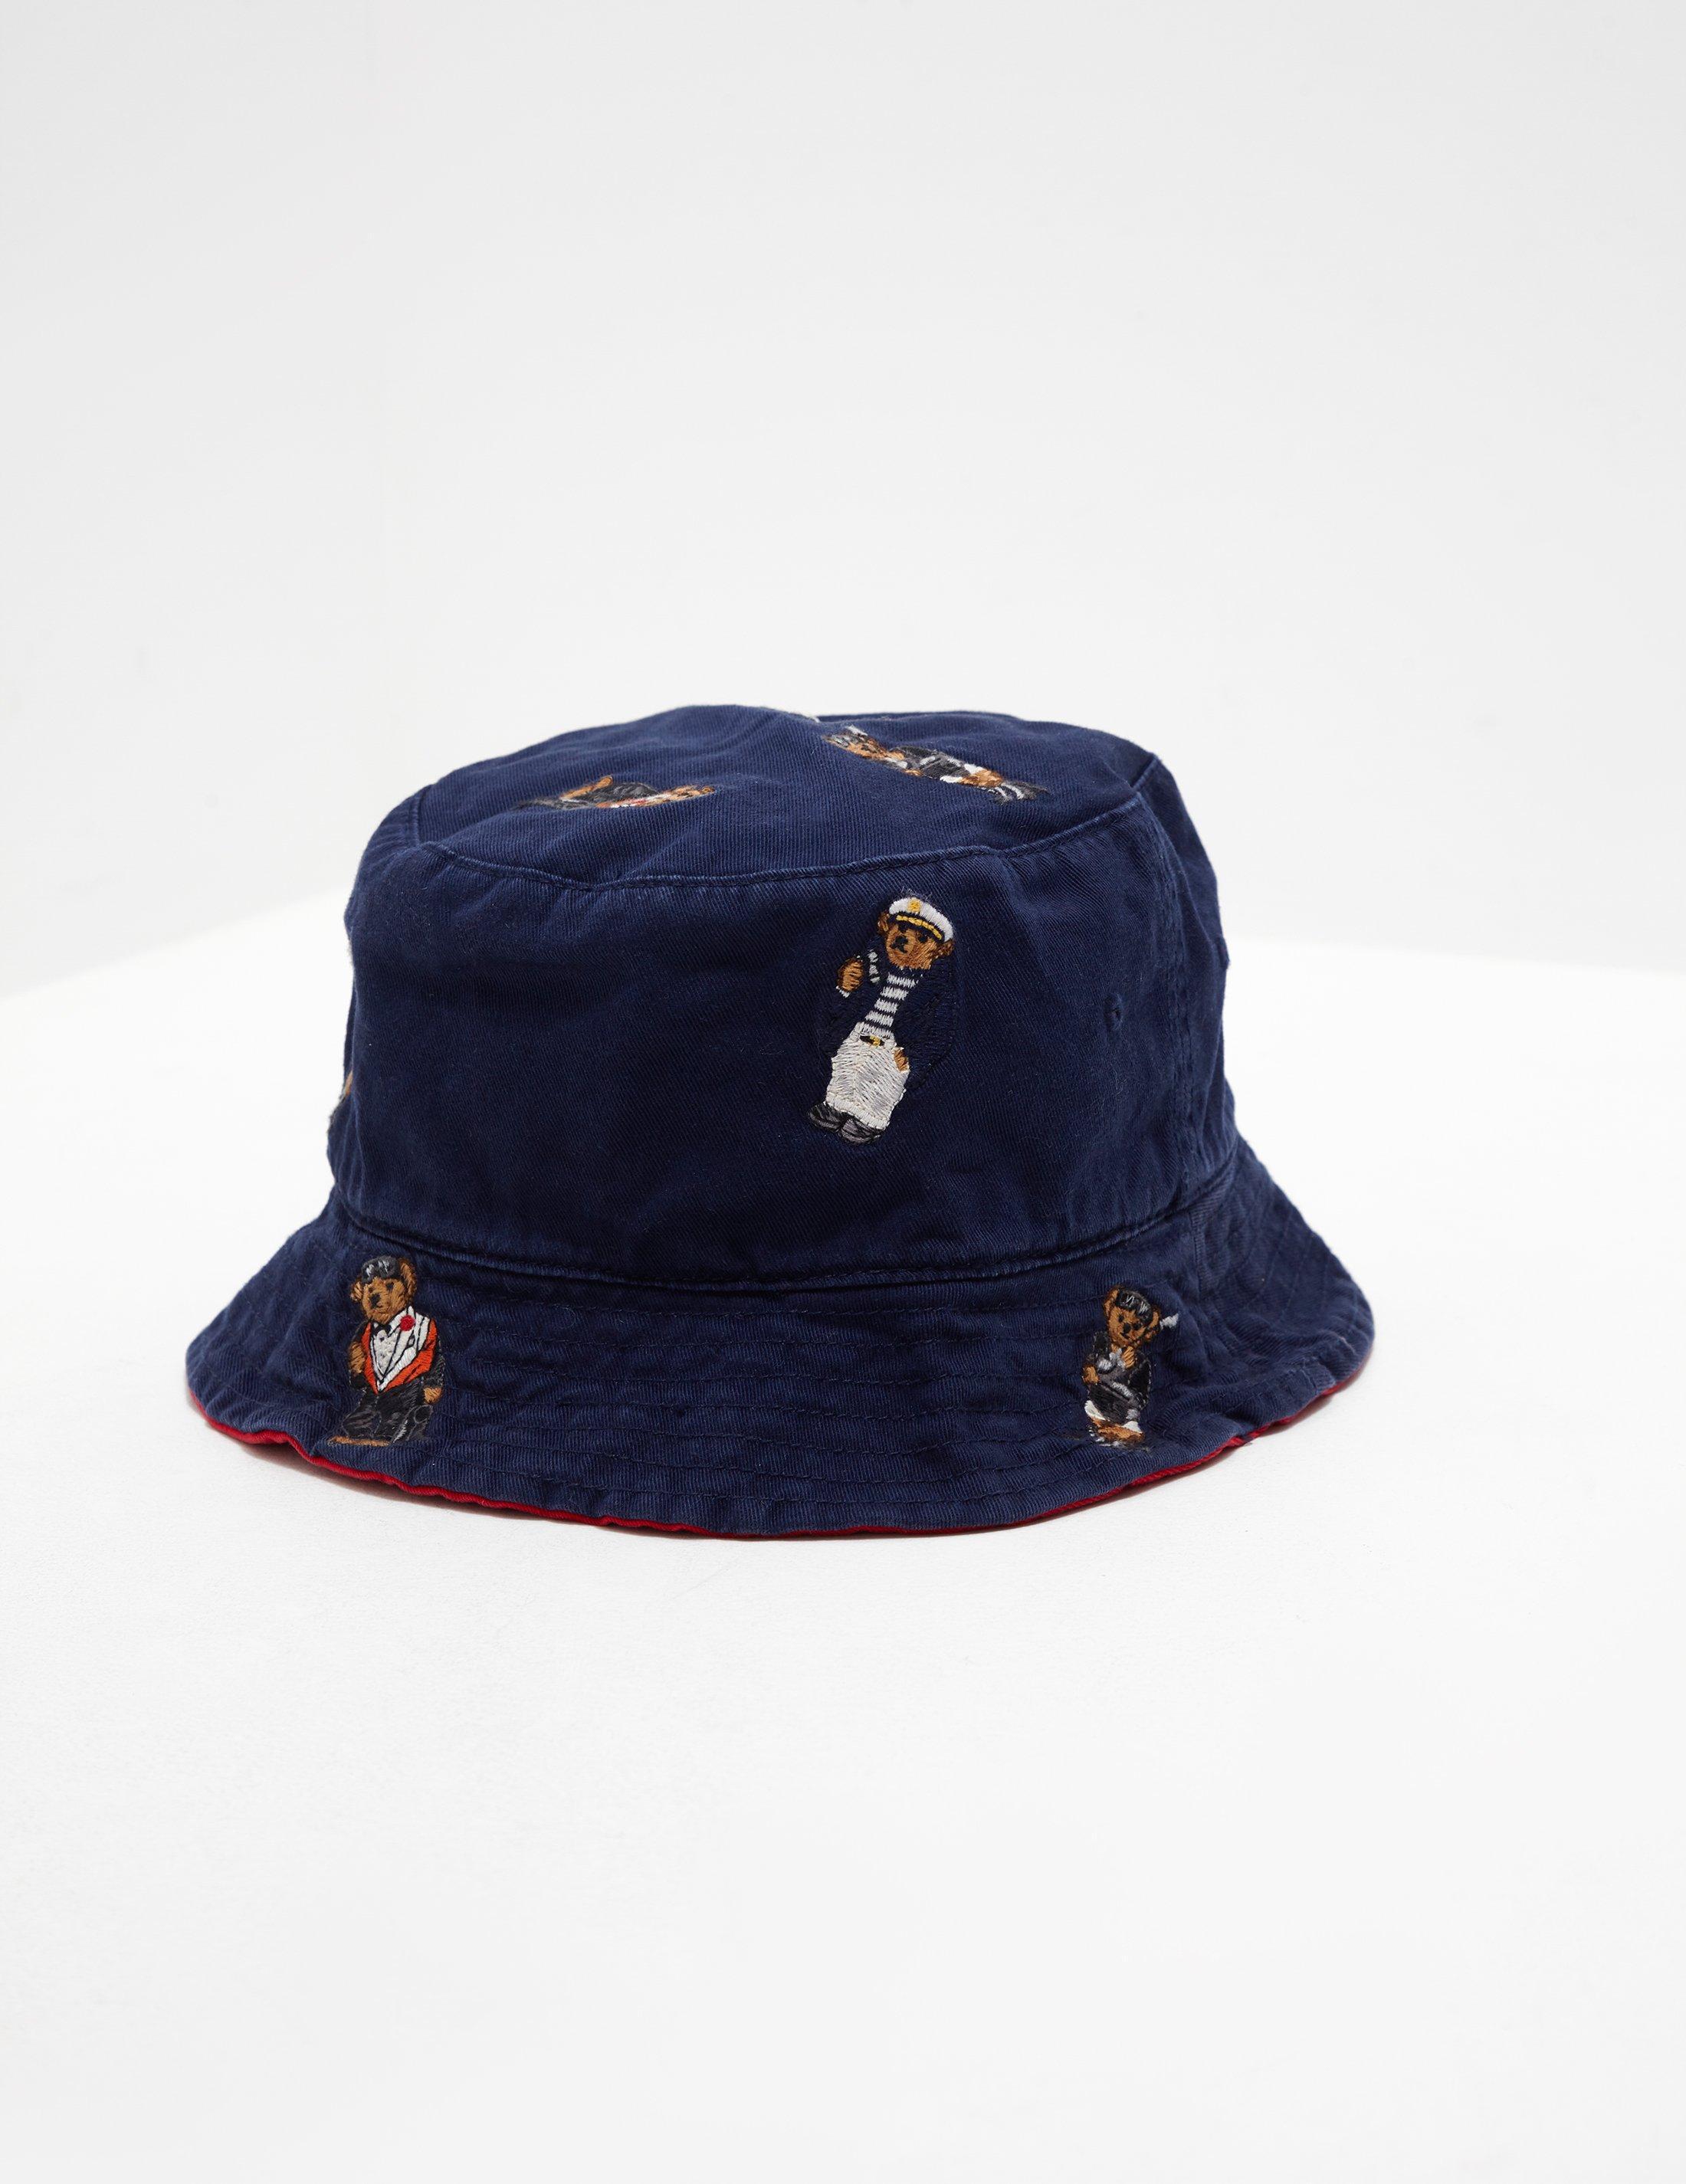 Polo Ralph Lauren Cotton Mens Bear Bucket Hat - Online Exclusive Navy Blue  for Men - Lyst